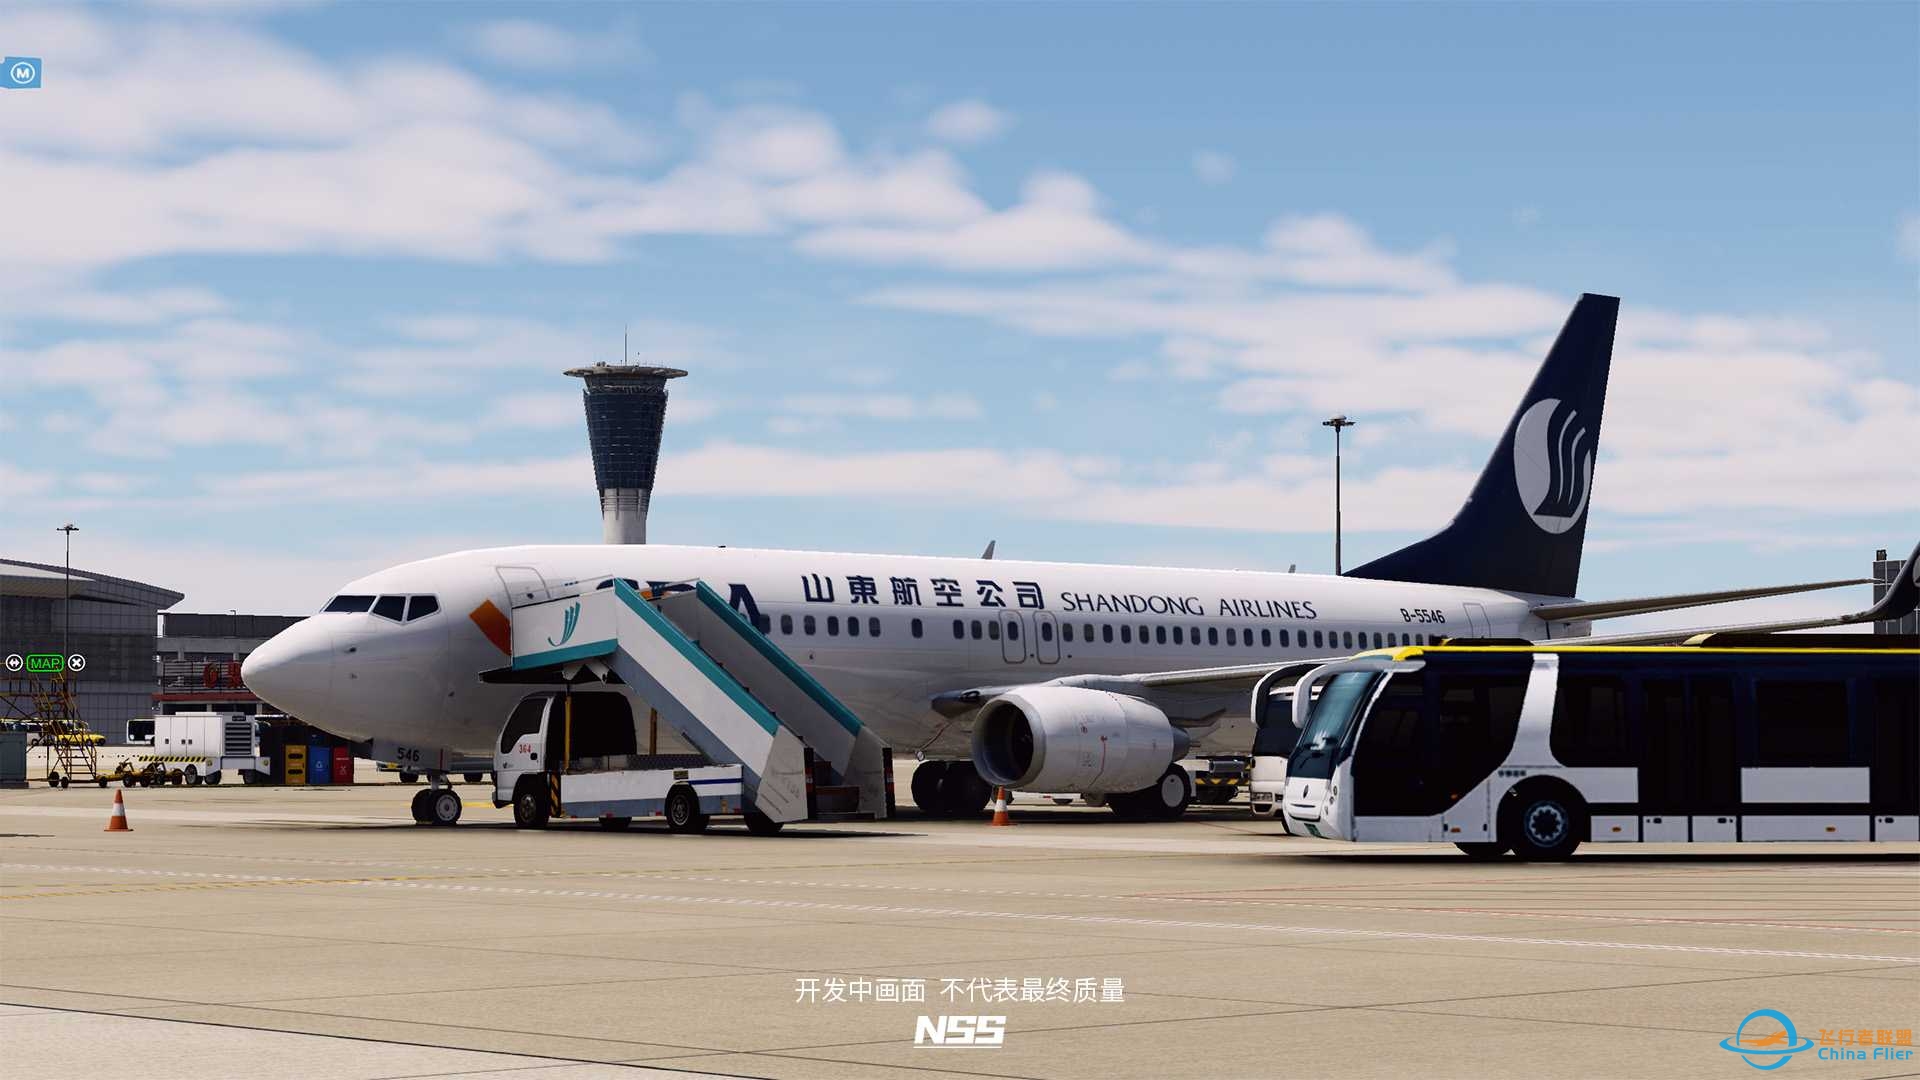 NSS地景开发组 | ZSJN | 济南遥墙国际机场项目最新进展-9503 